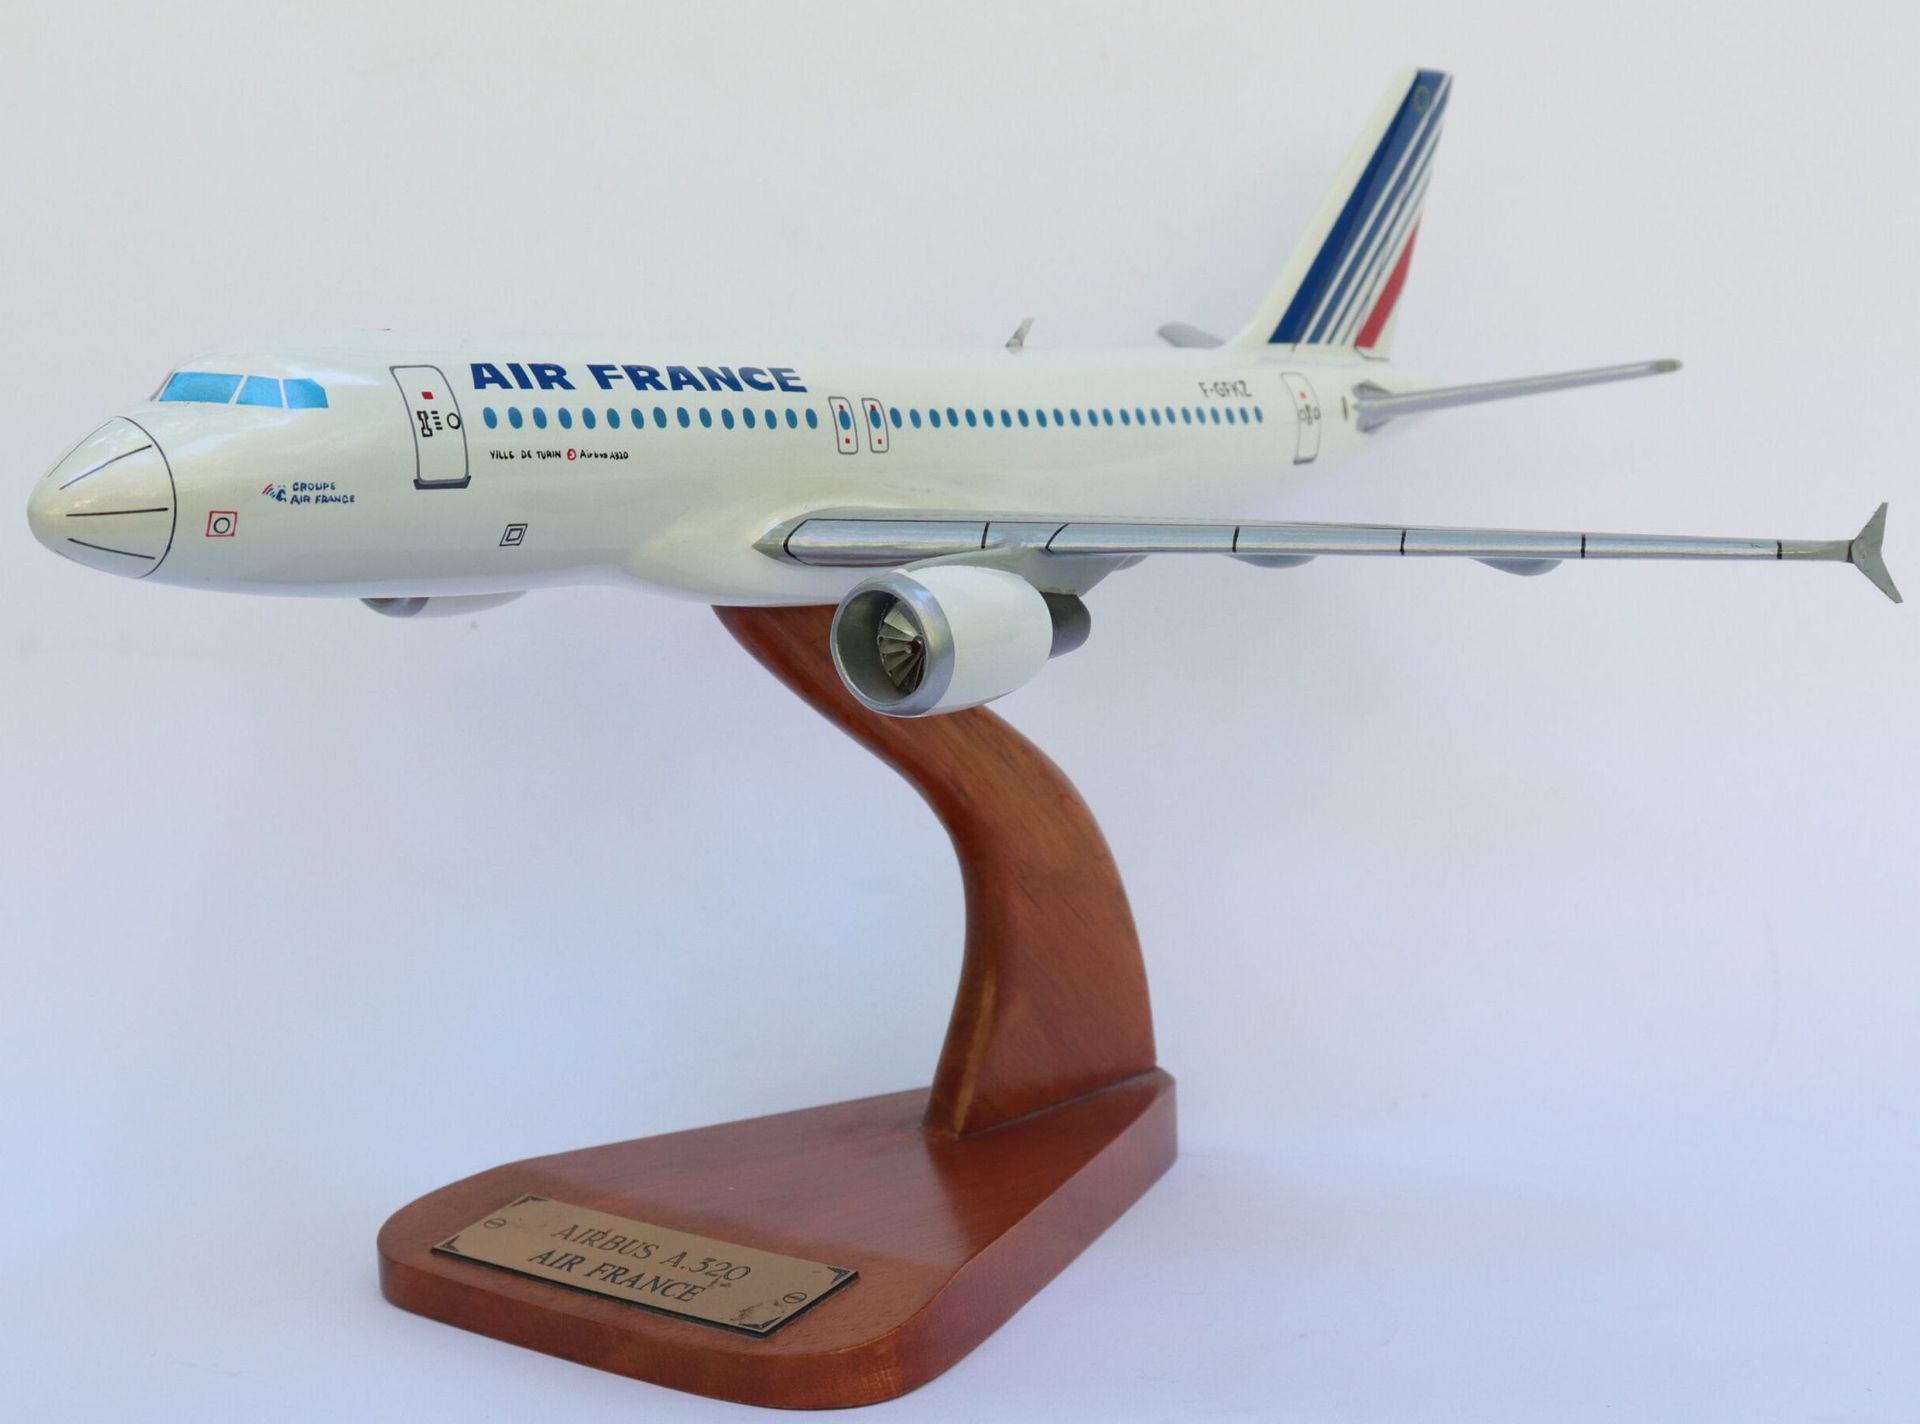 Null 空中客车A320法国航空公司。

当代的木质喷漆模型，注册号为F-GFKZ，都灵市。

木质底座。

翼展：35厘米。高22厘米。状况非常好。



&hellip;